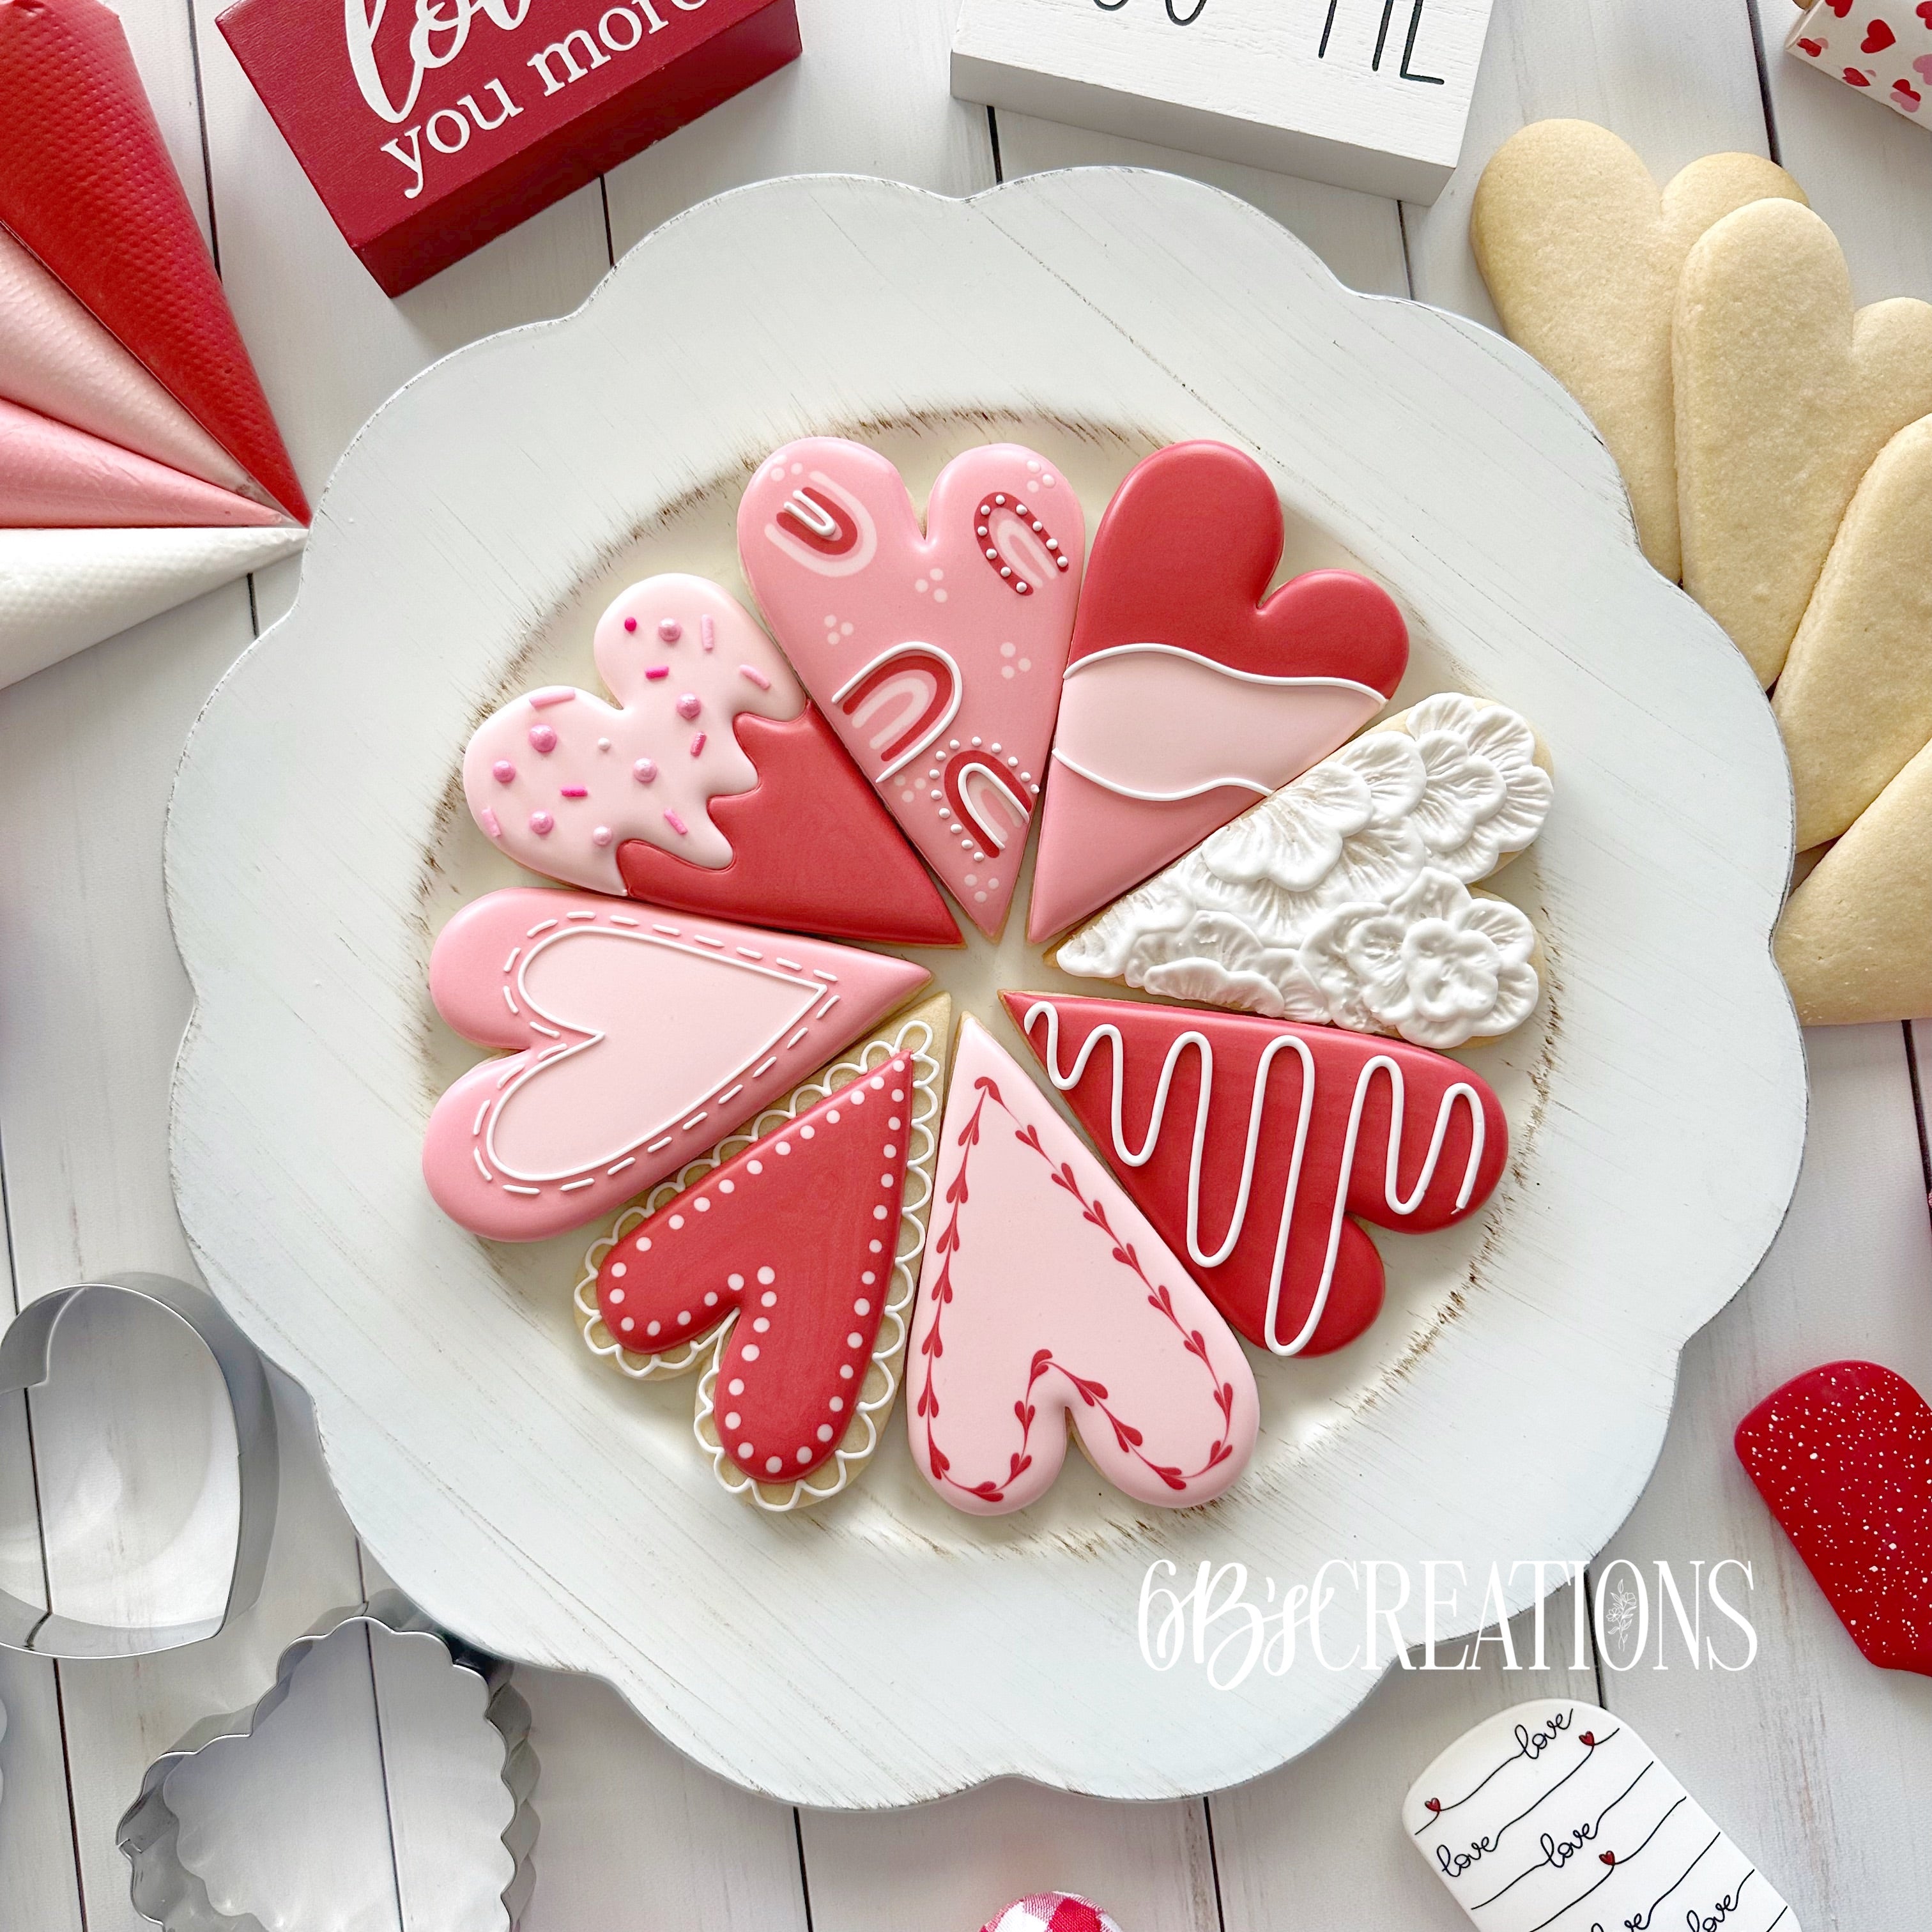 Ateco 6-Piece Heart Cookie Cutter Set - WebstaurantStore